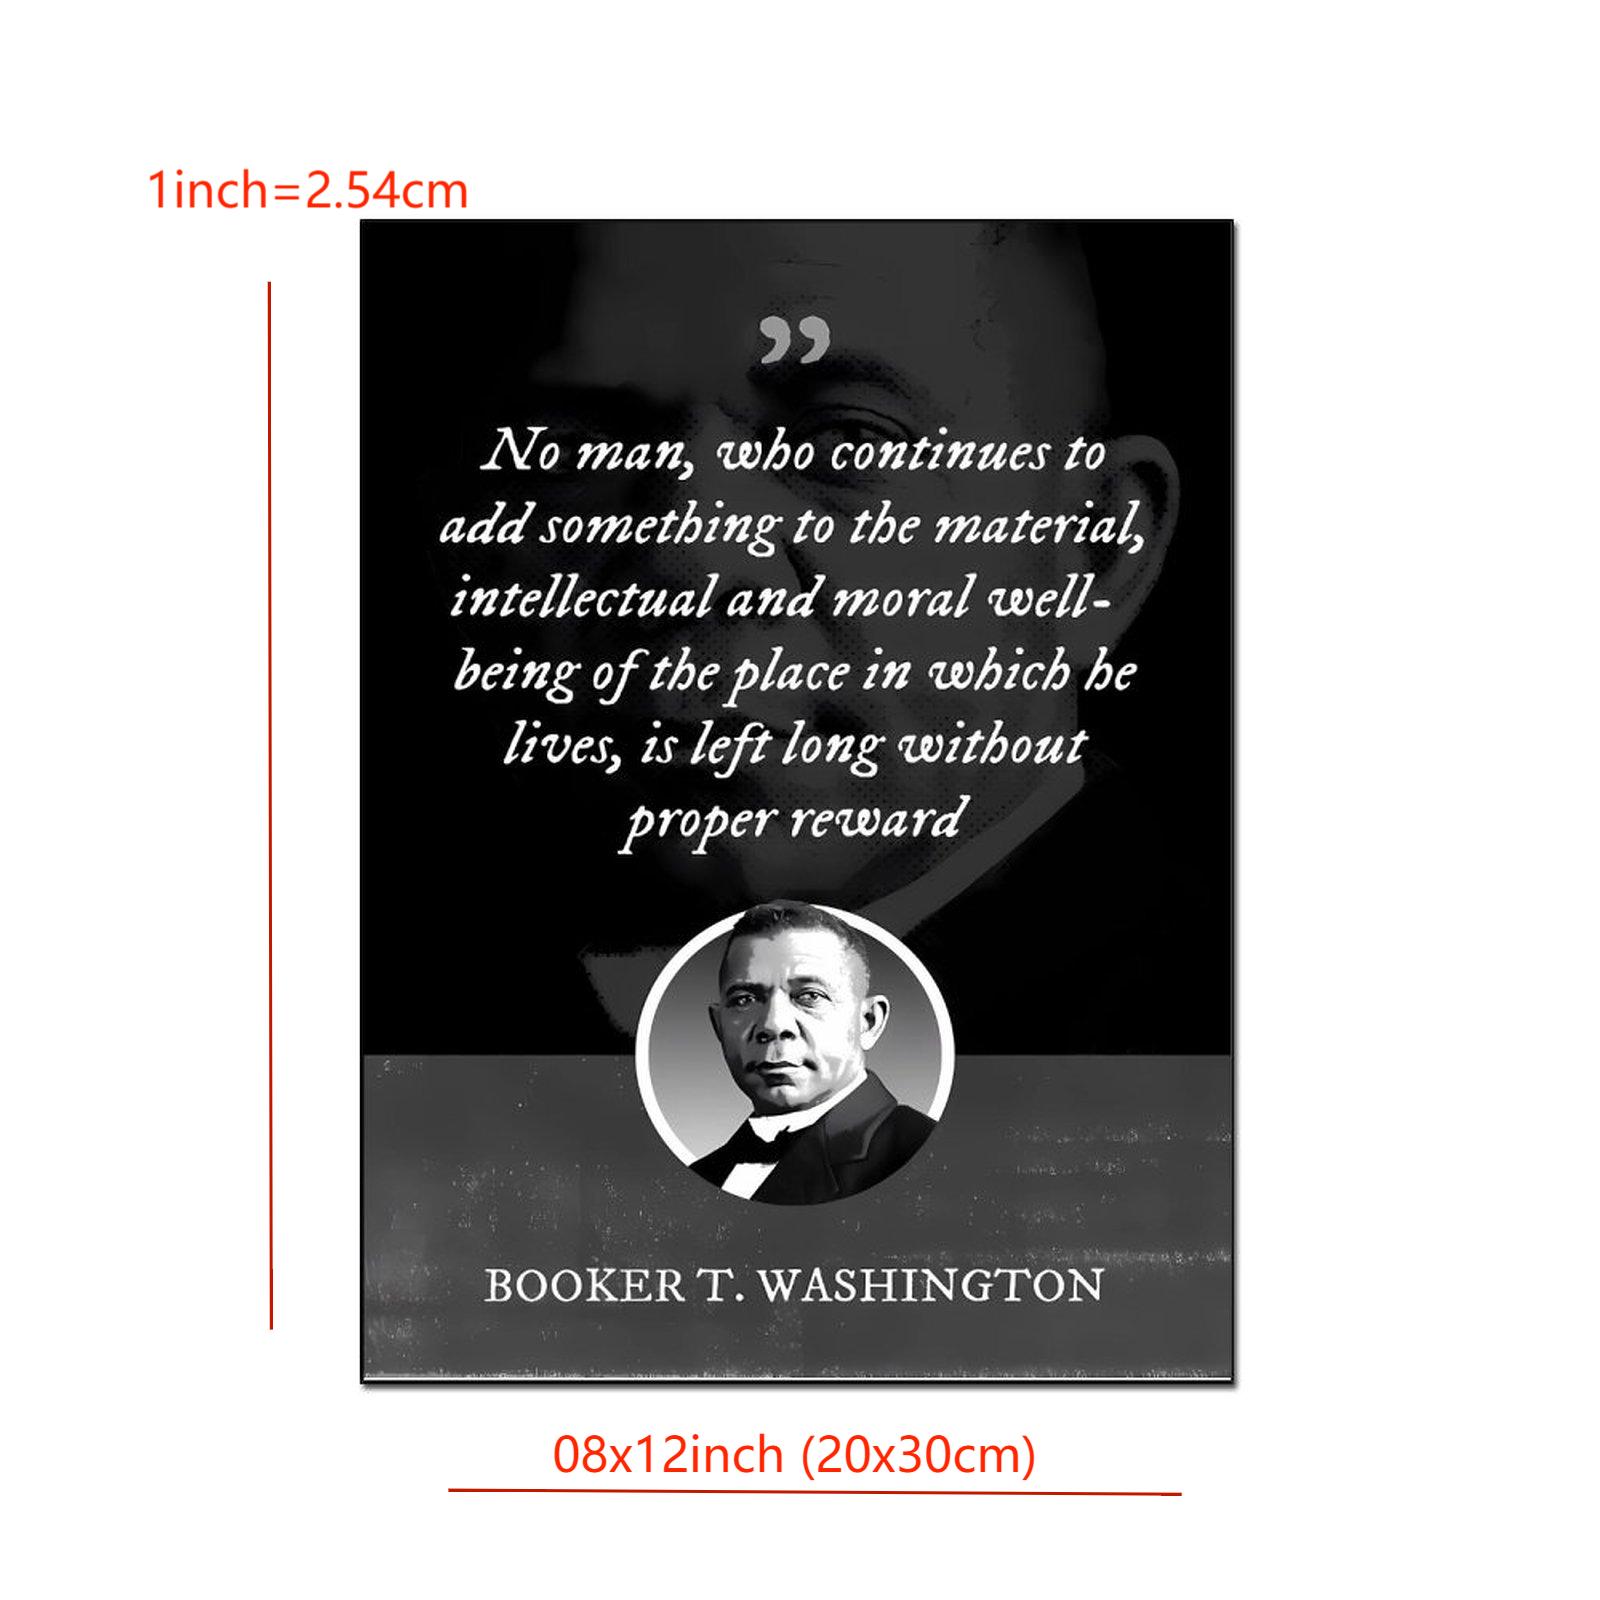 INSPIRATIONAL QUOTE: Booker T. Washington